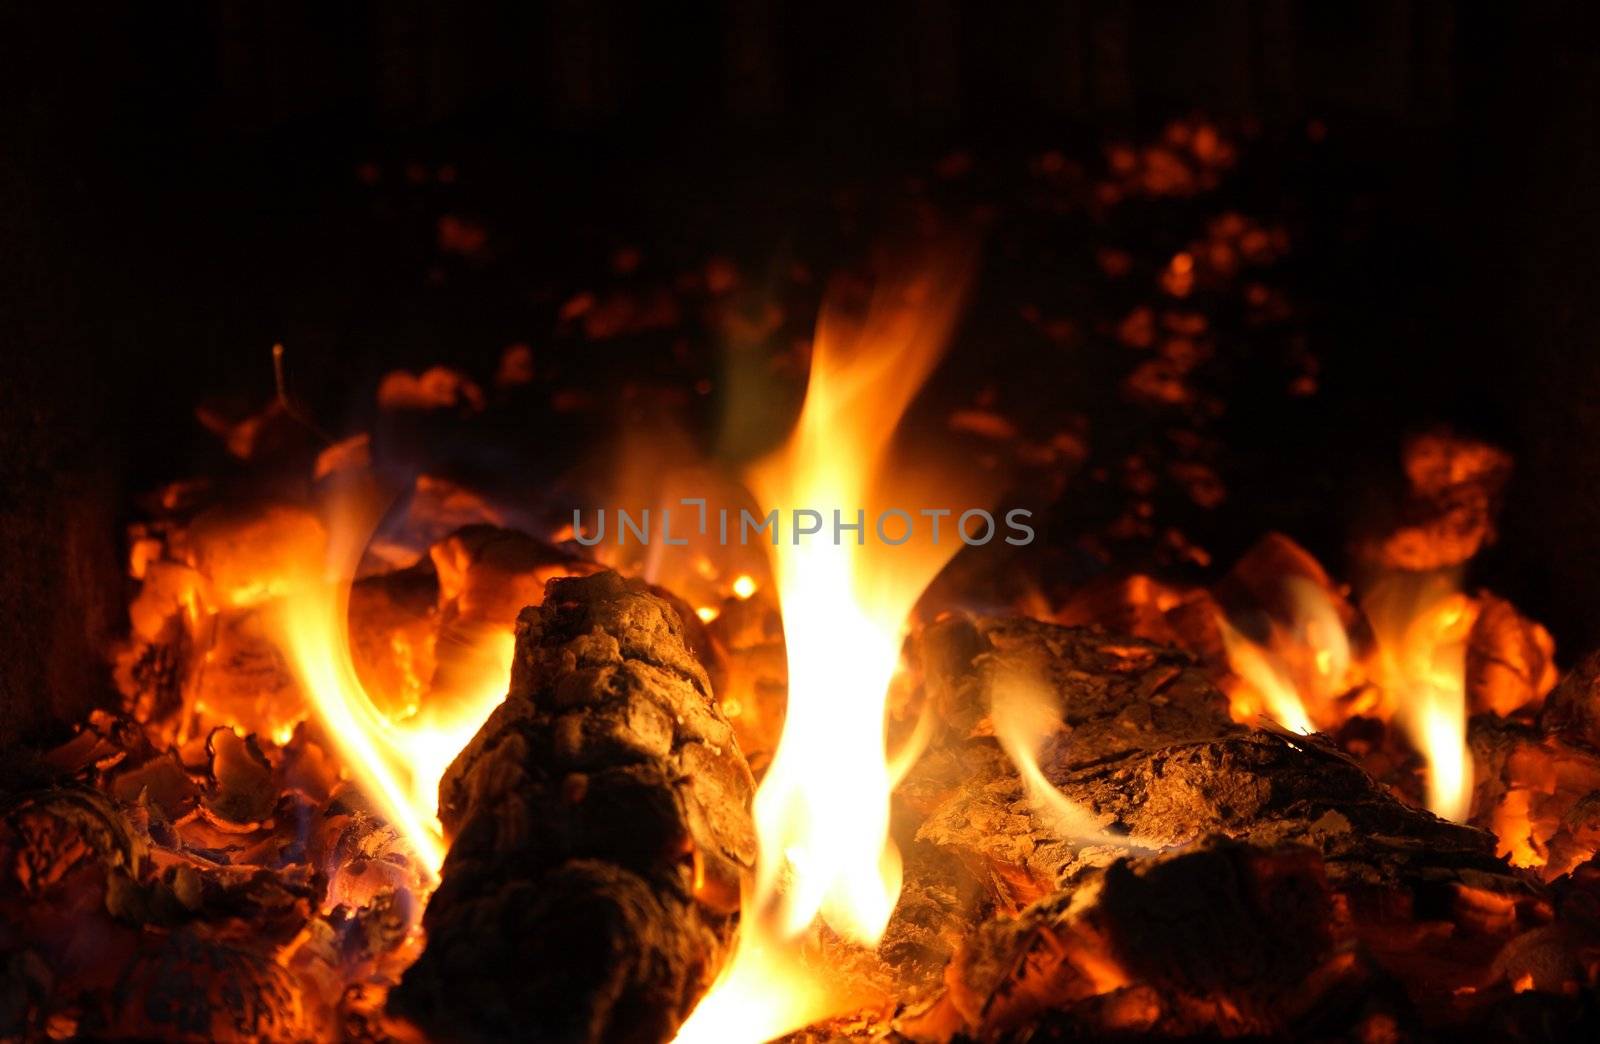 Flames and ember by anikasalsera